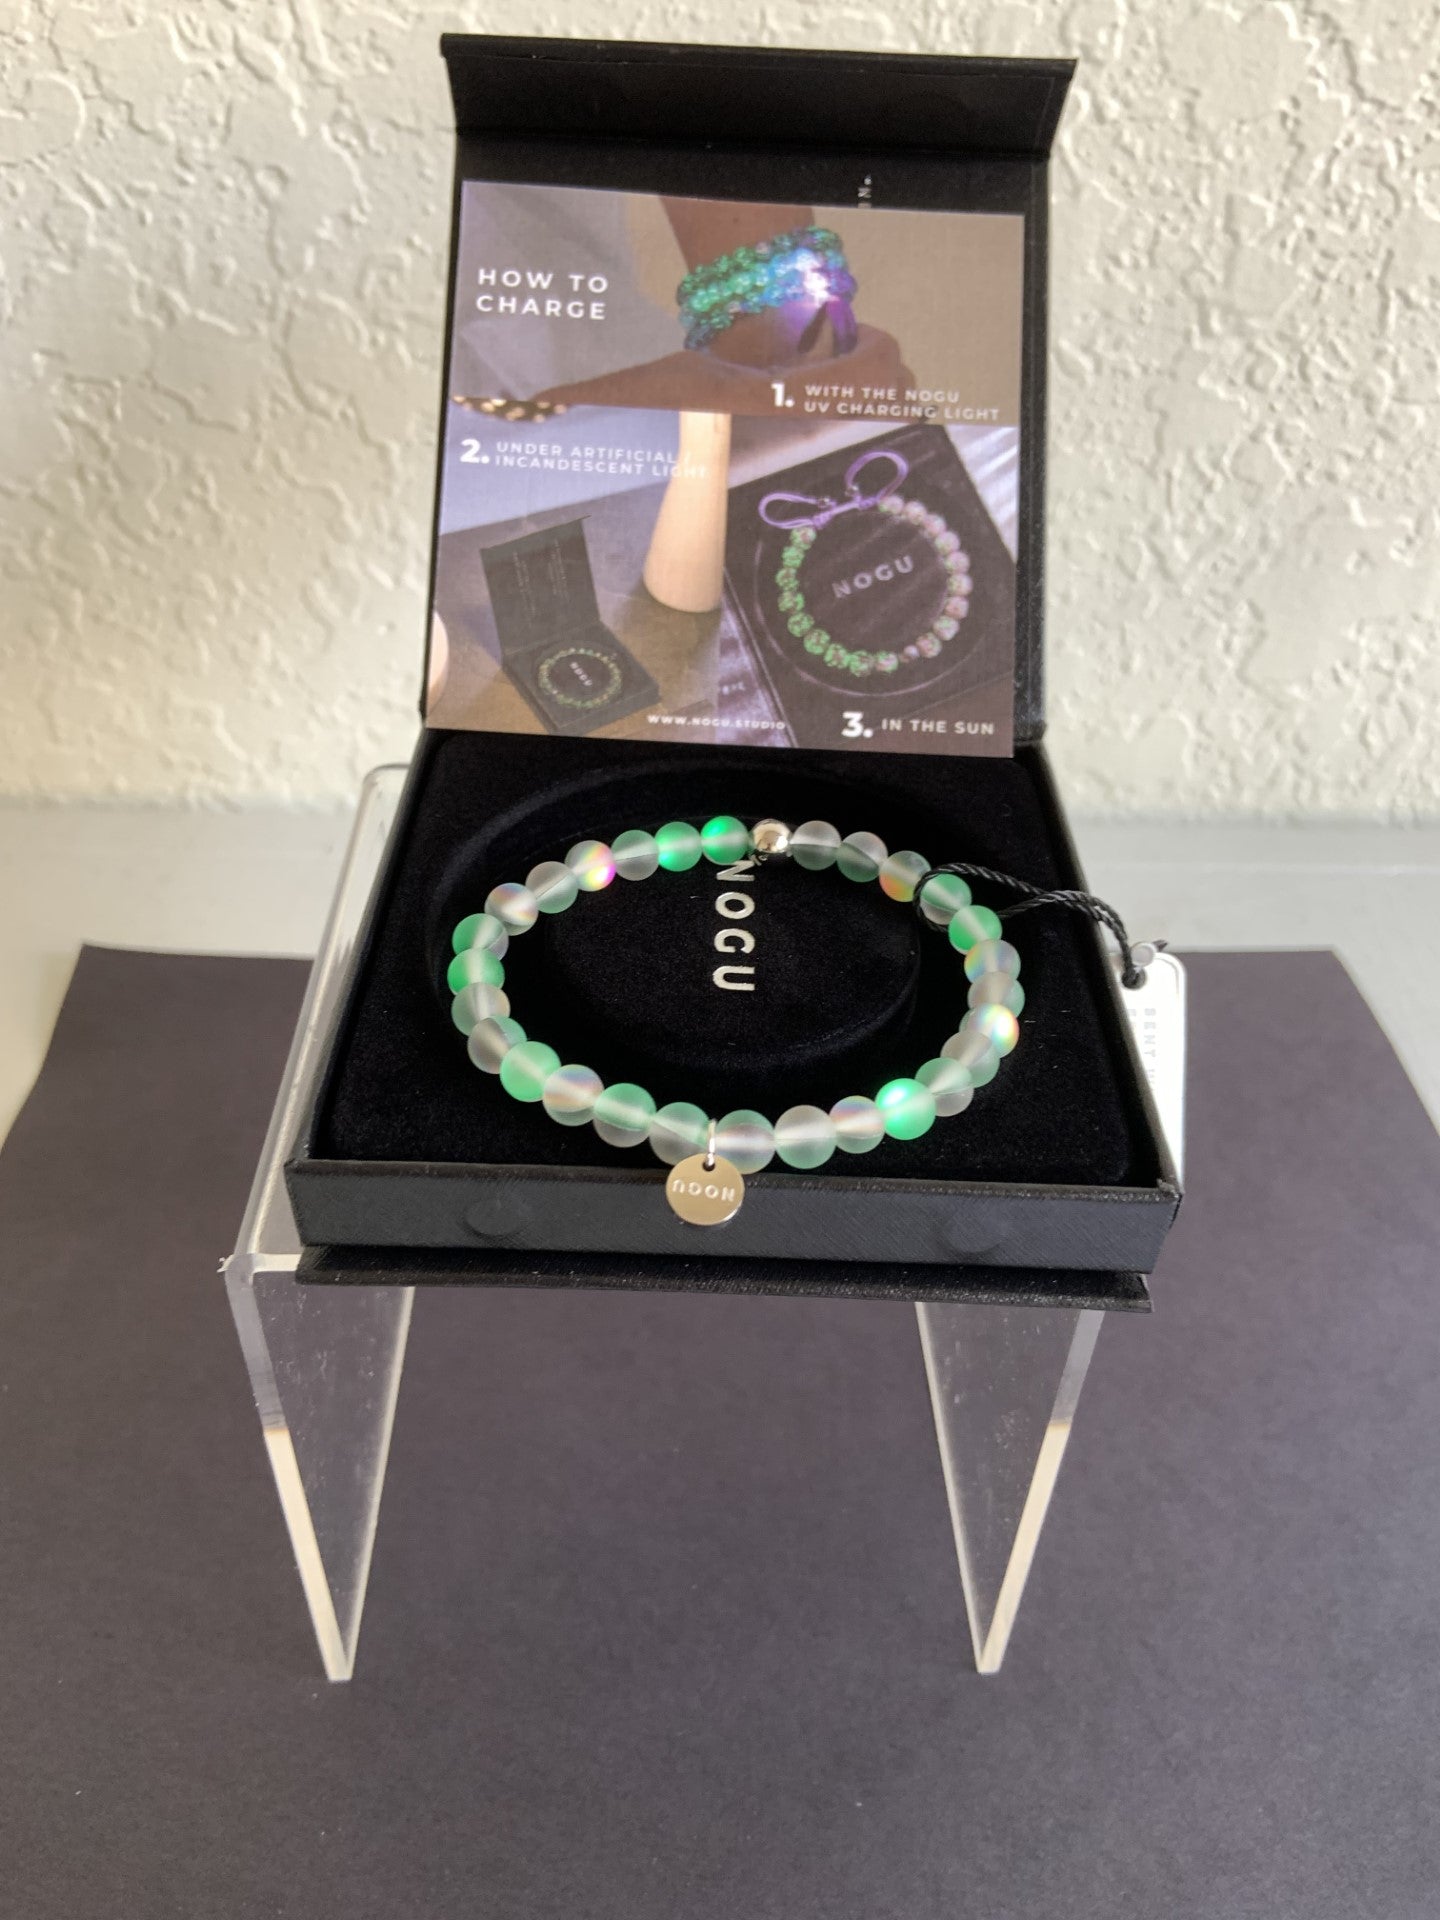 NOGU Unicorn Green Mermaid Glass Bead Bracelet